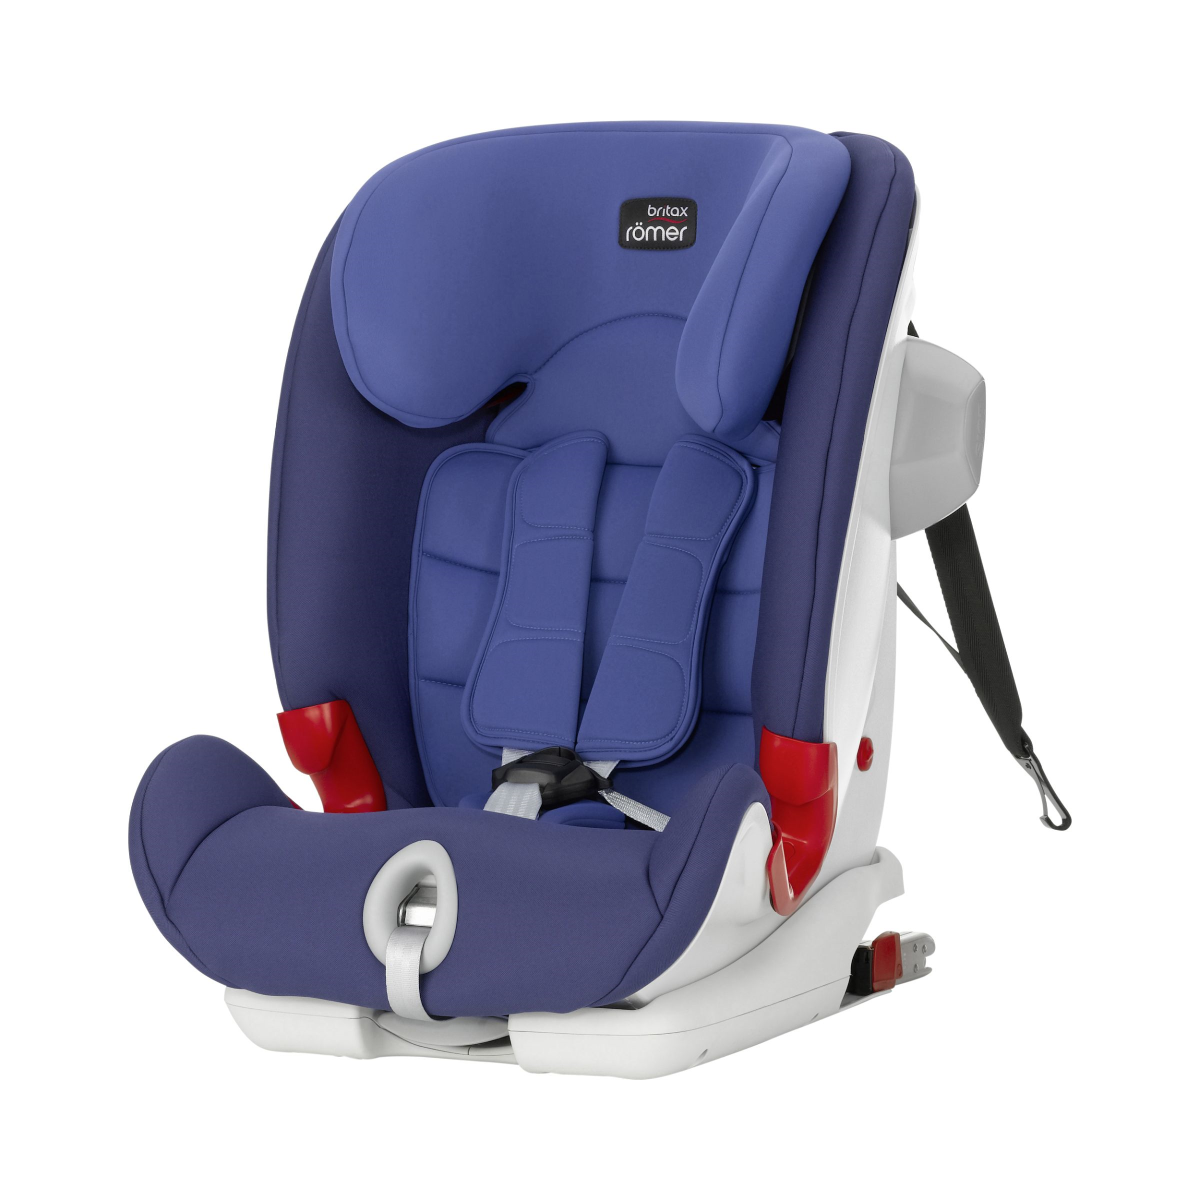 Britax Advansafix III SICT Car Seat